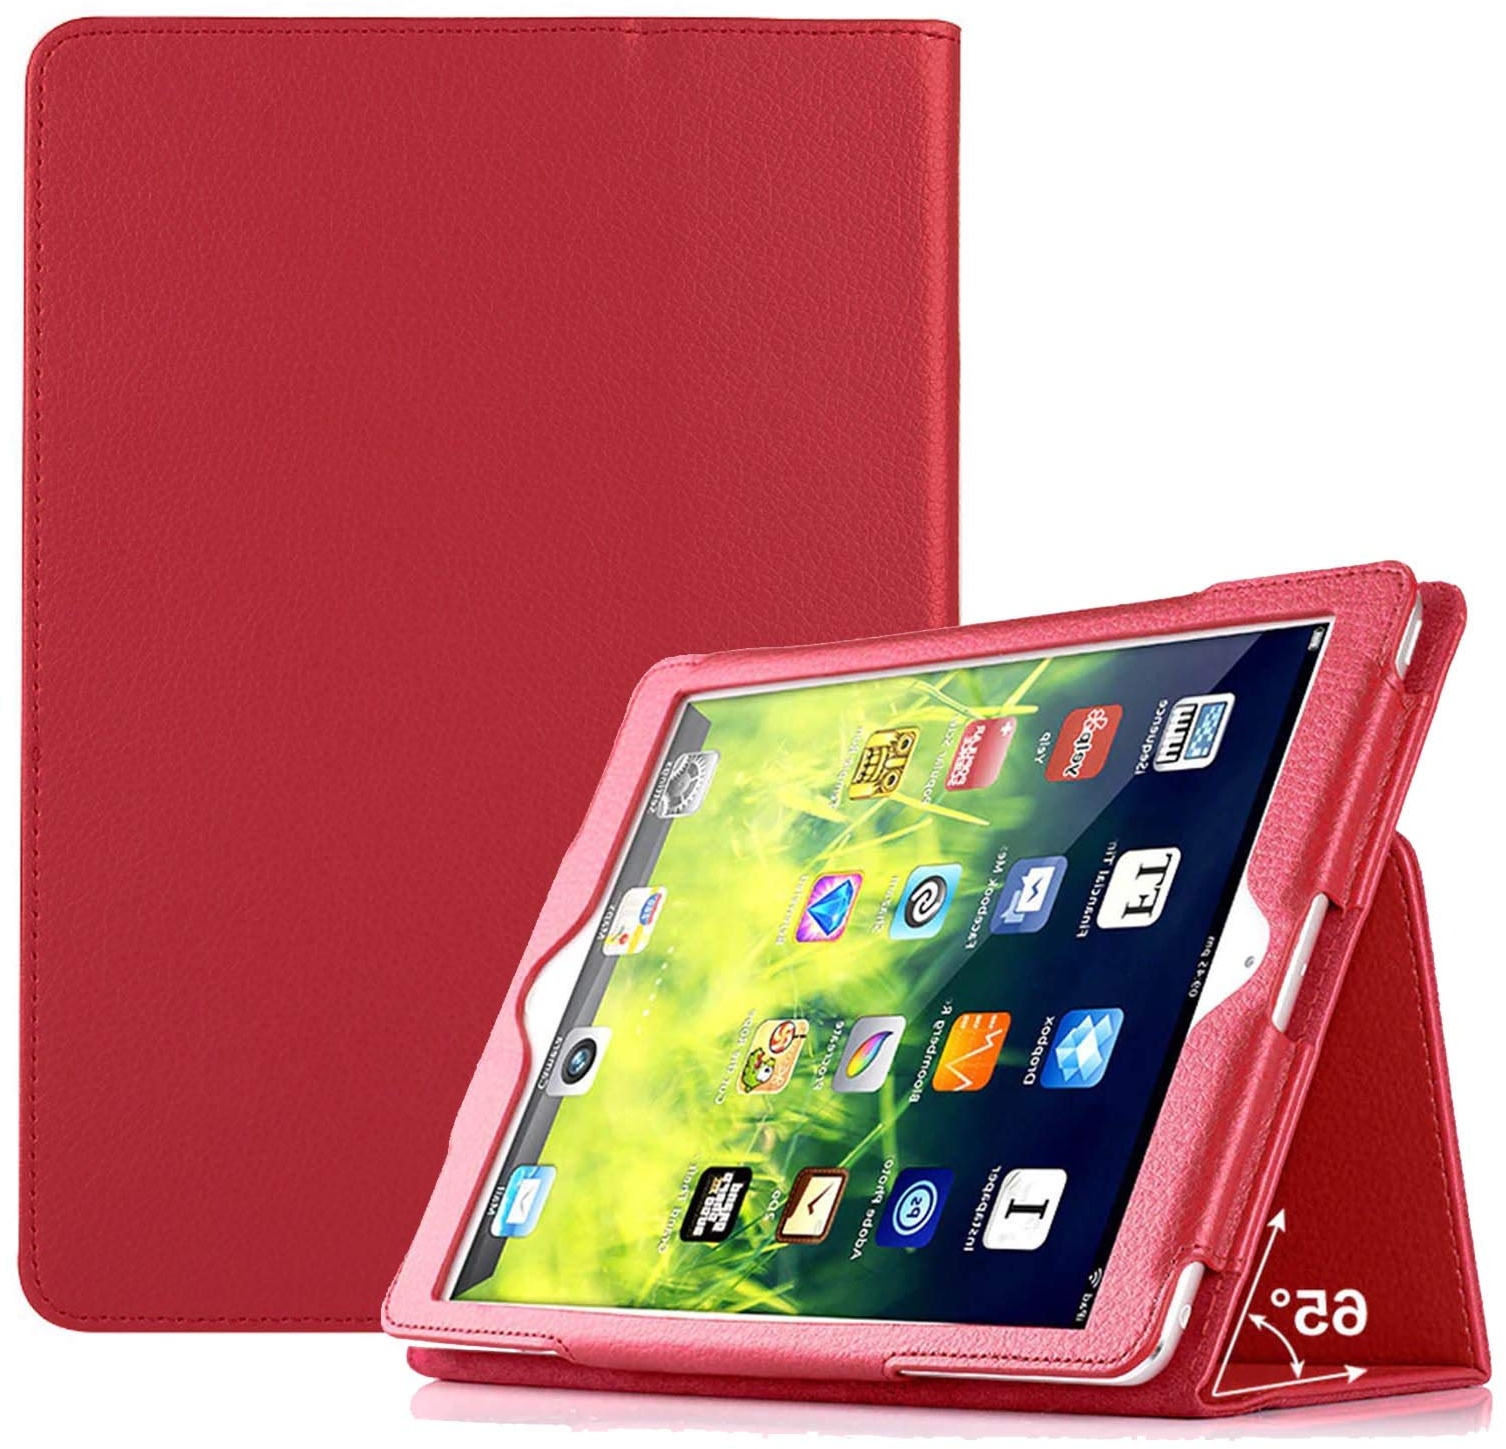 Lobwerk Hülle für Apple iPad Mini 4 und iPad Mini 5 7.9 Zoll Slim Case Etui mit Stand Funktion Rot